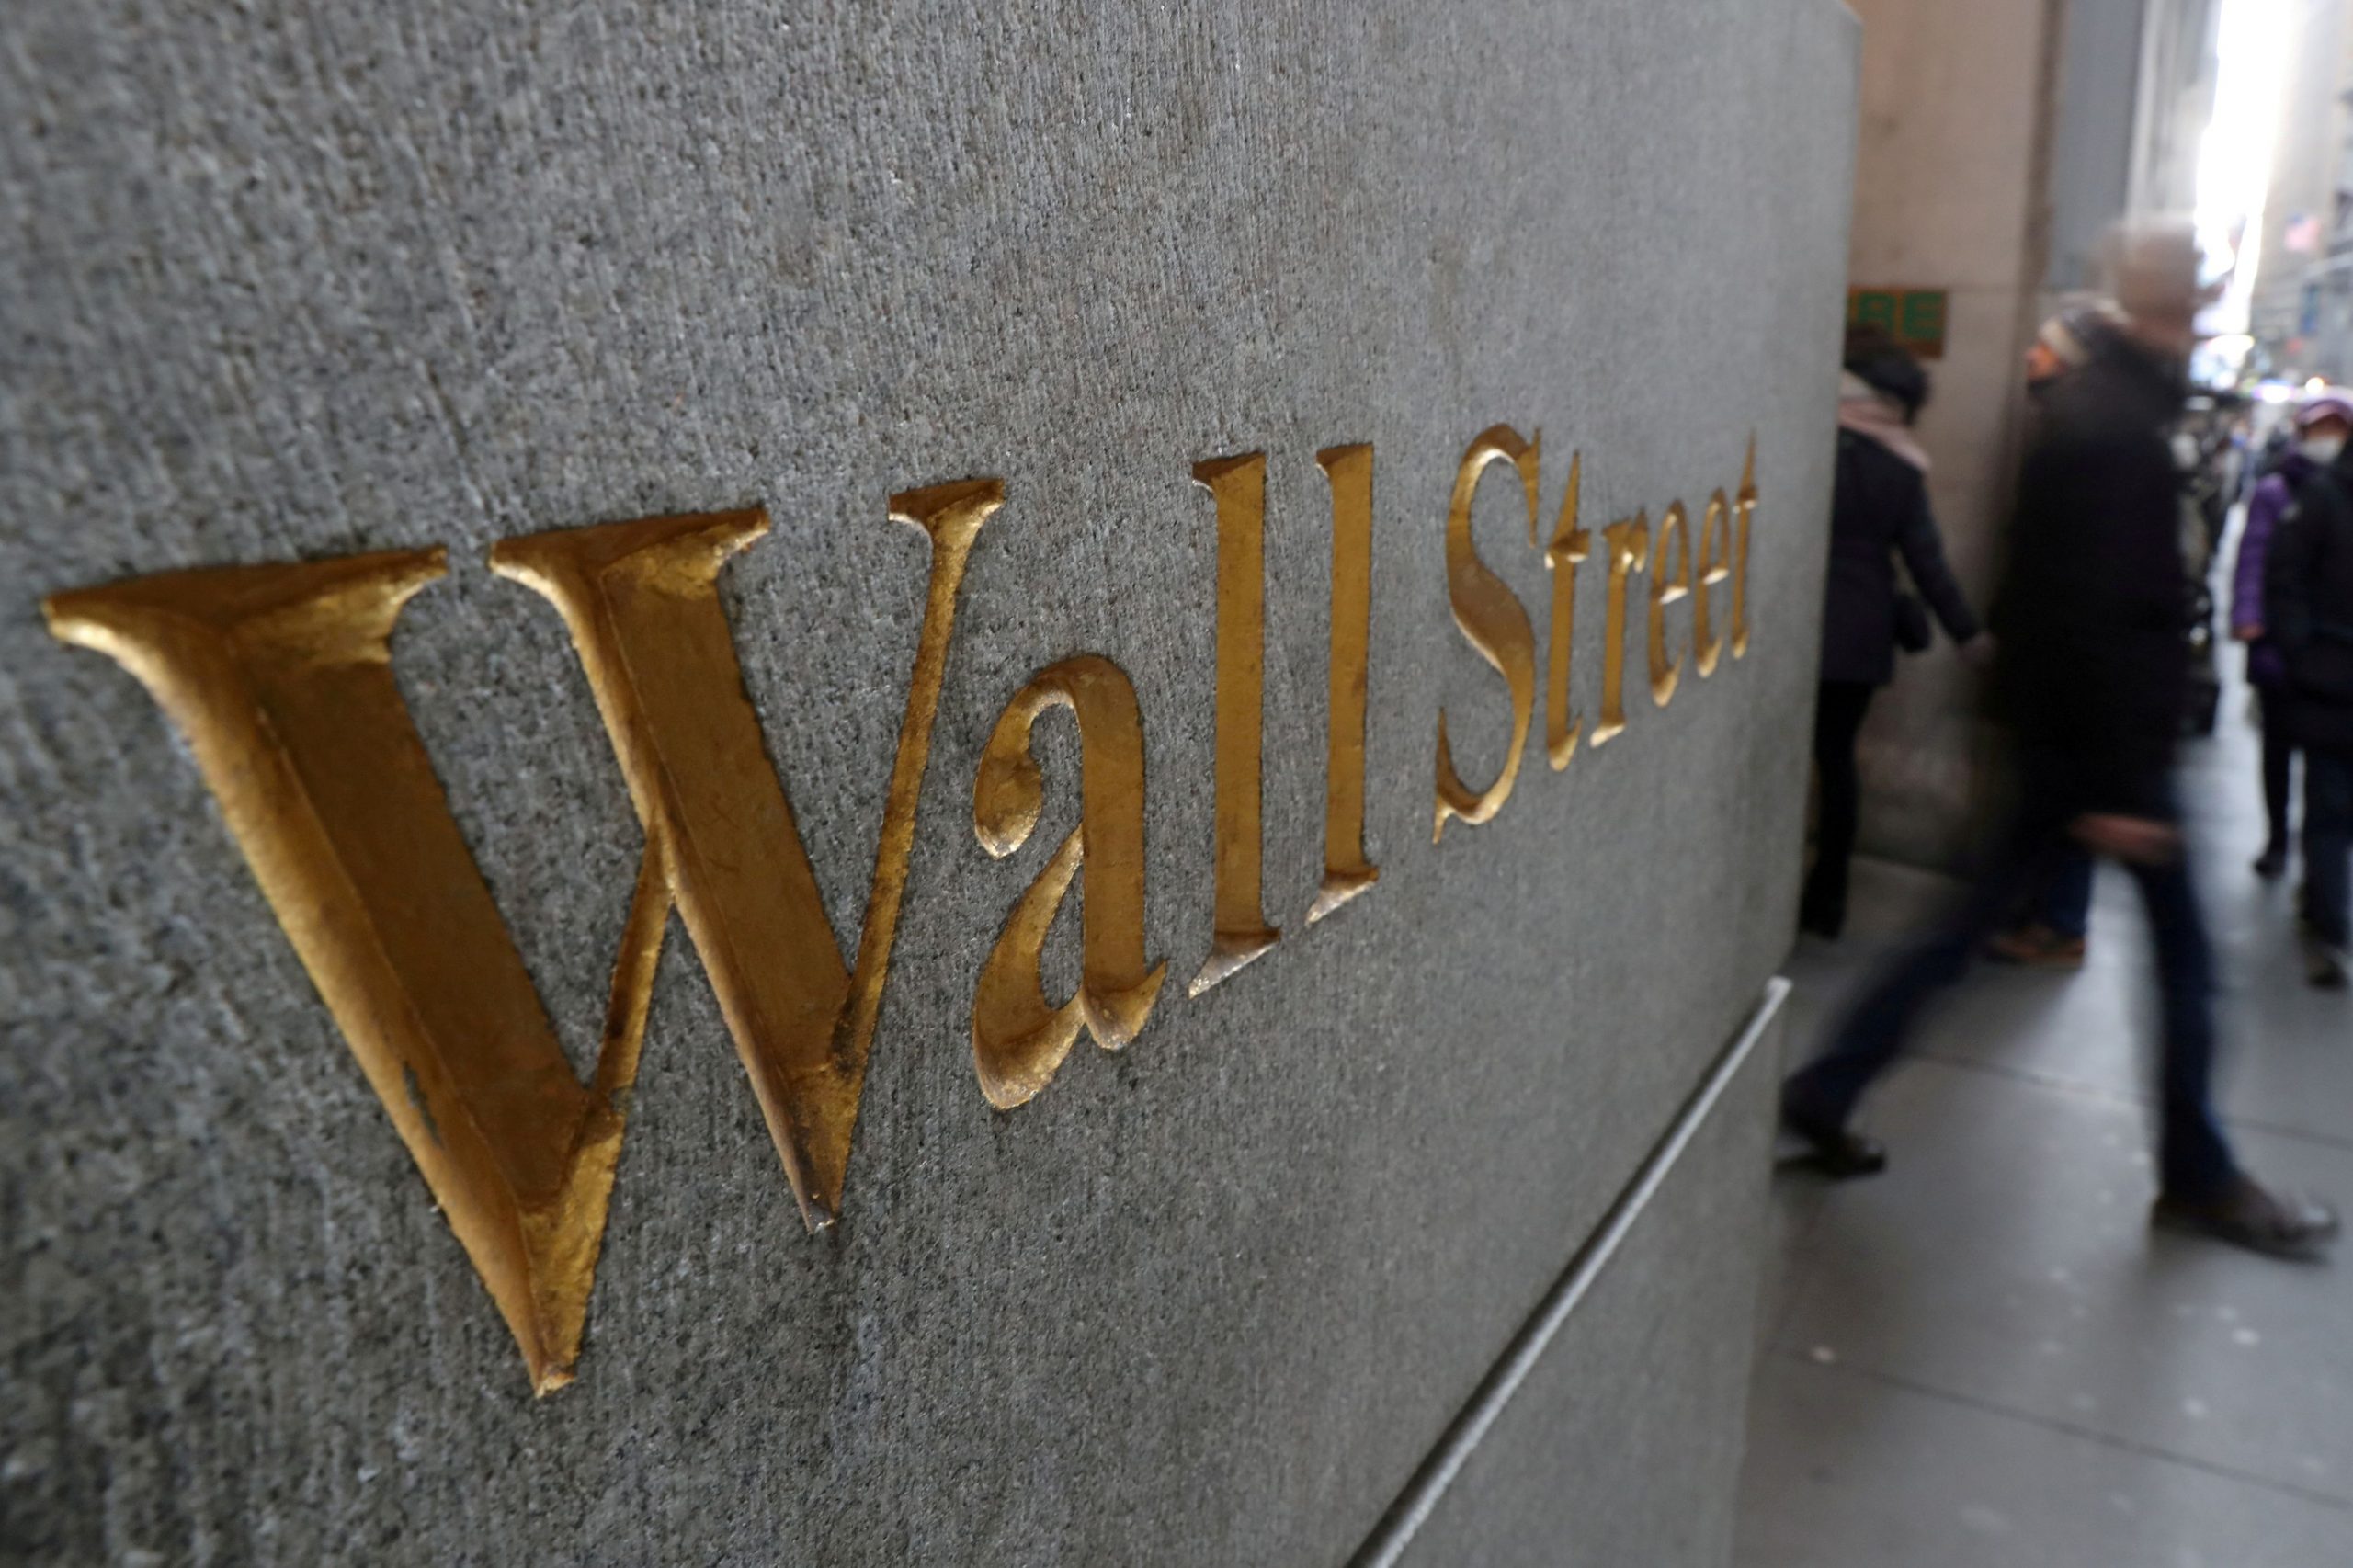 Wall Street: Τέταρτη ημέρα απωλειών για τον Dow Jones